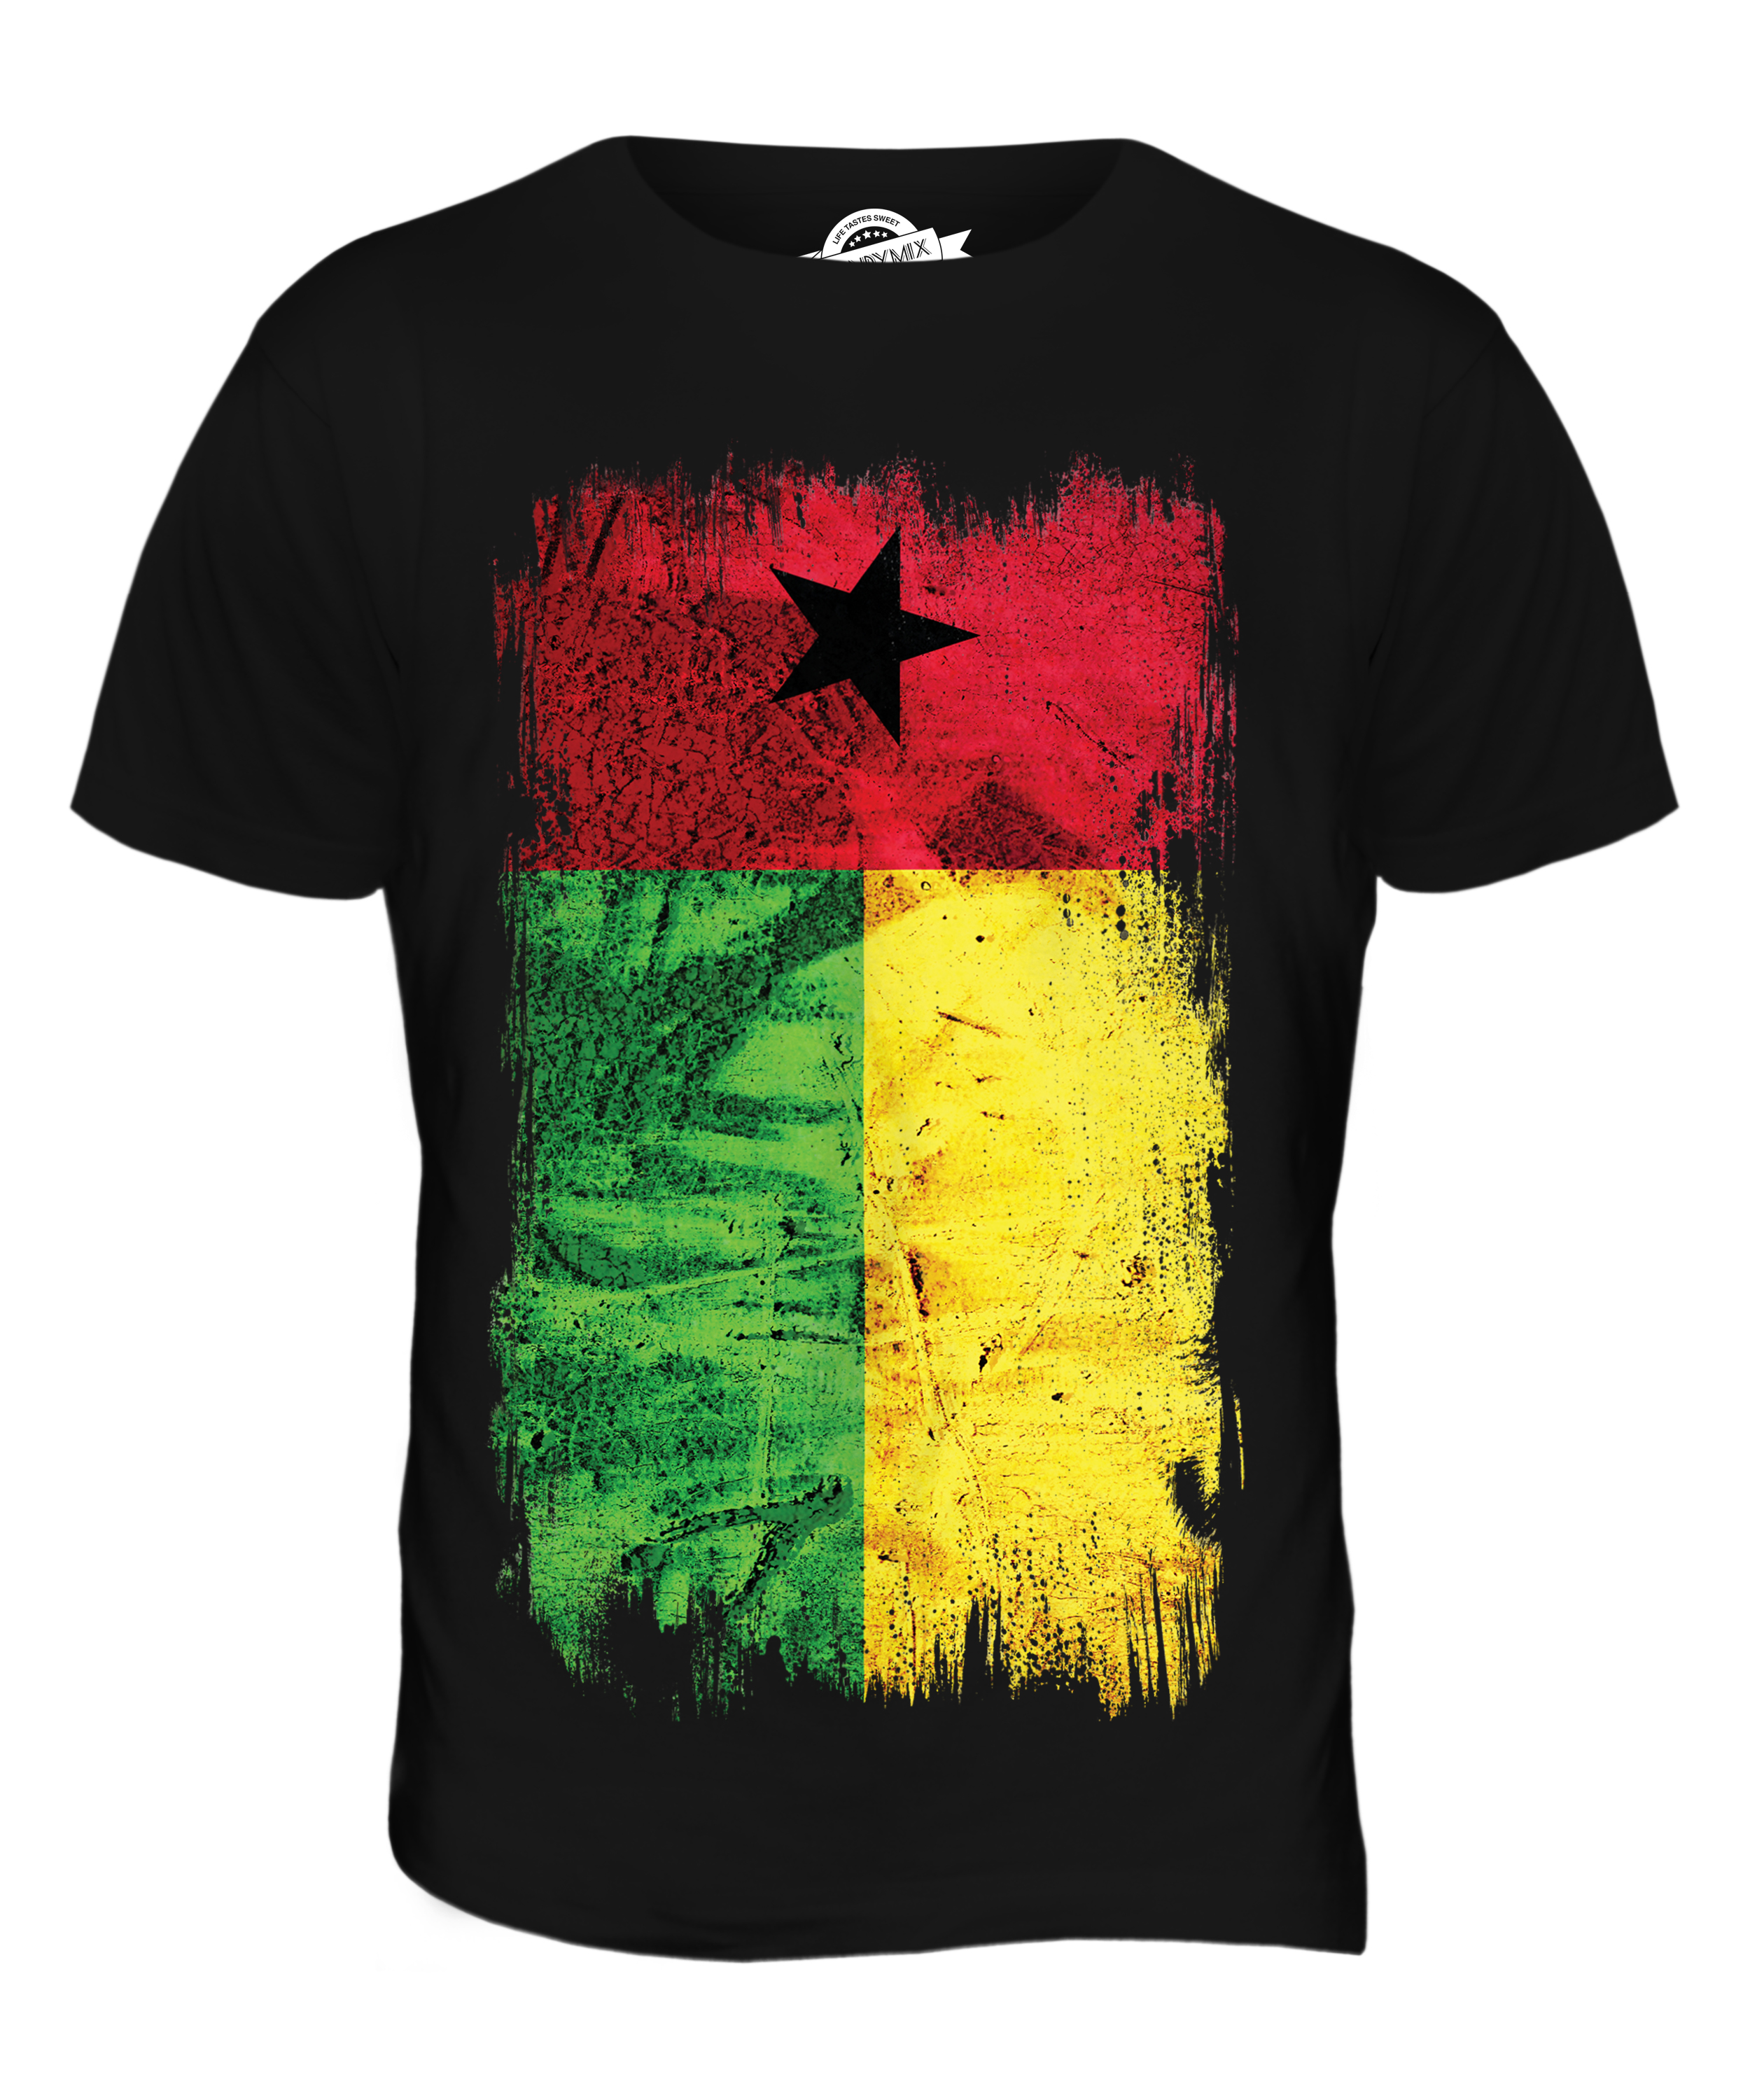 Guinea grunge flag photo